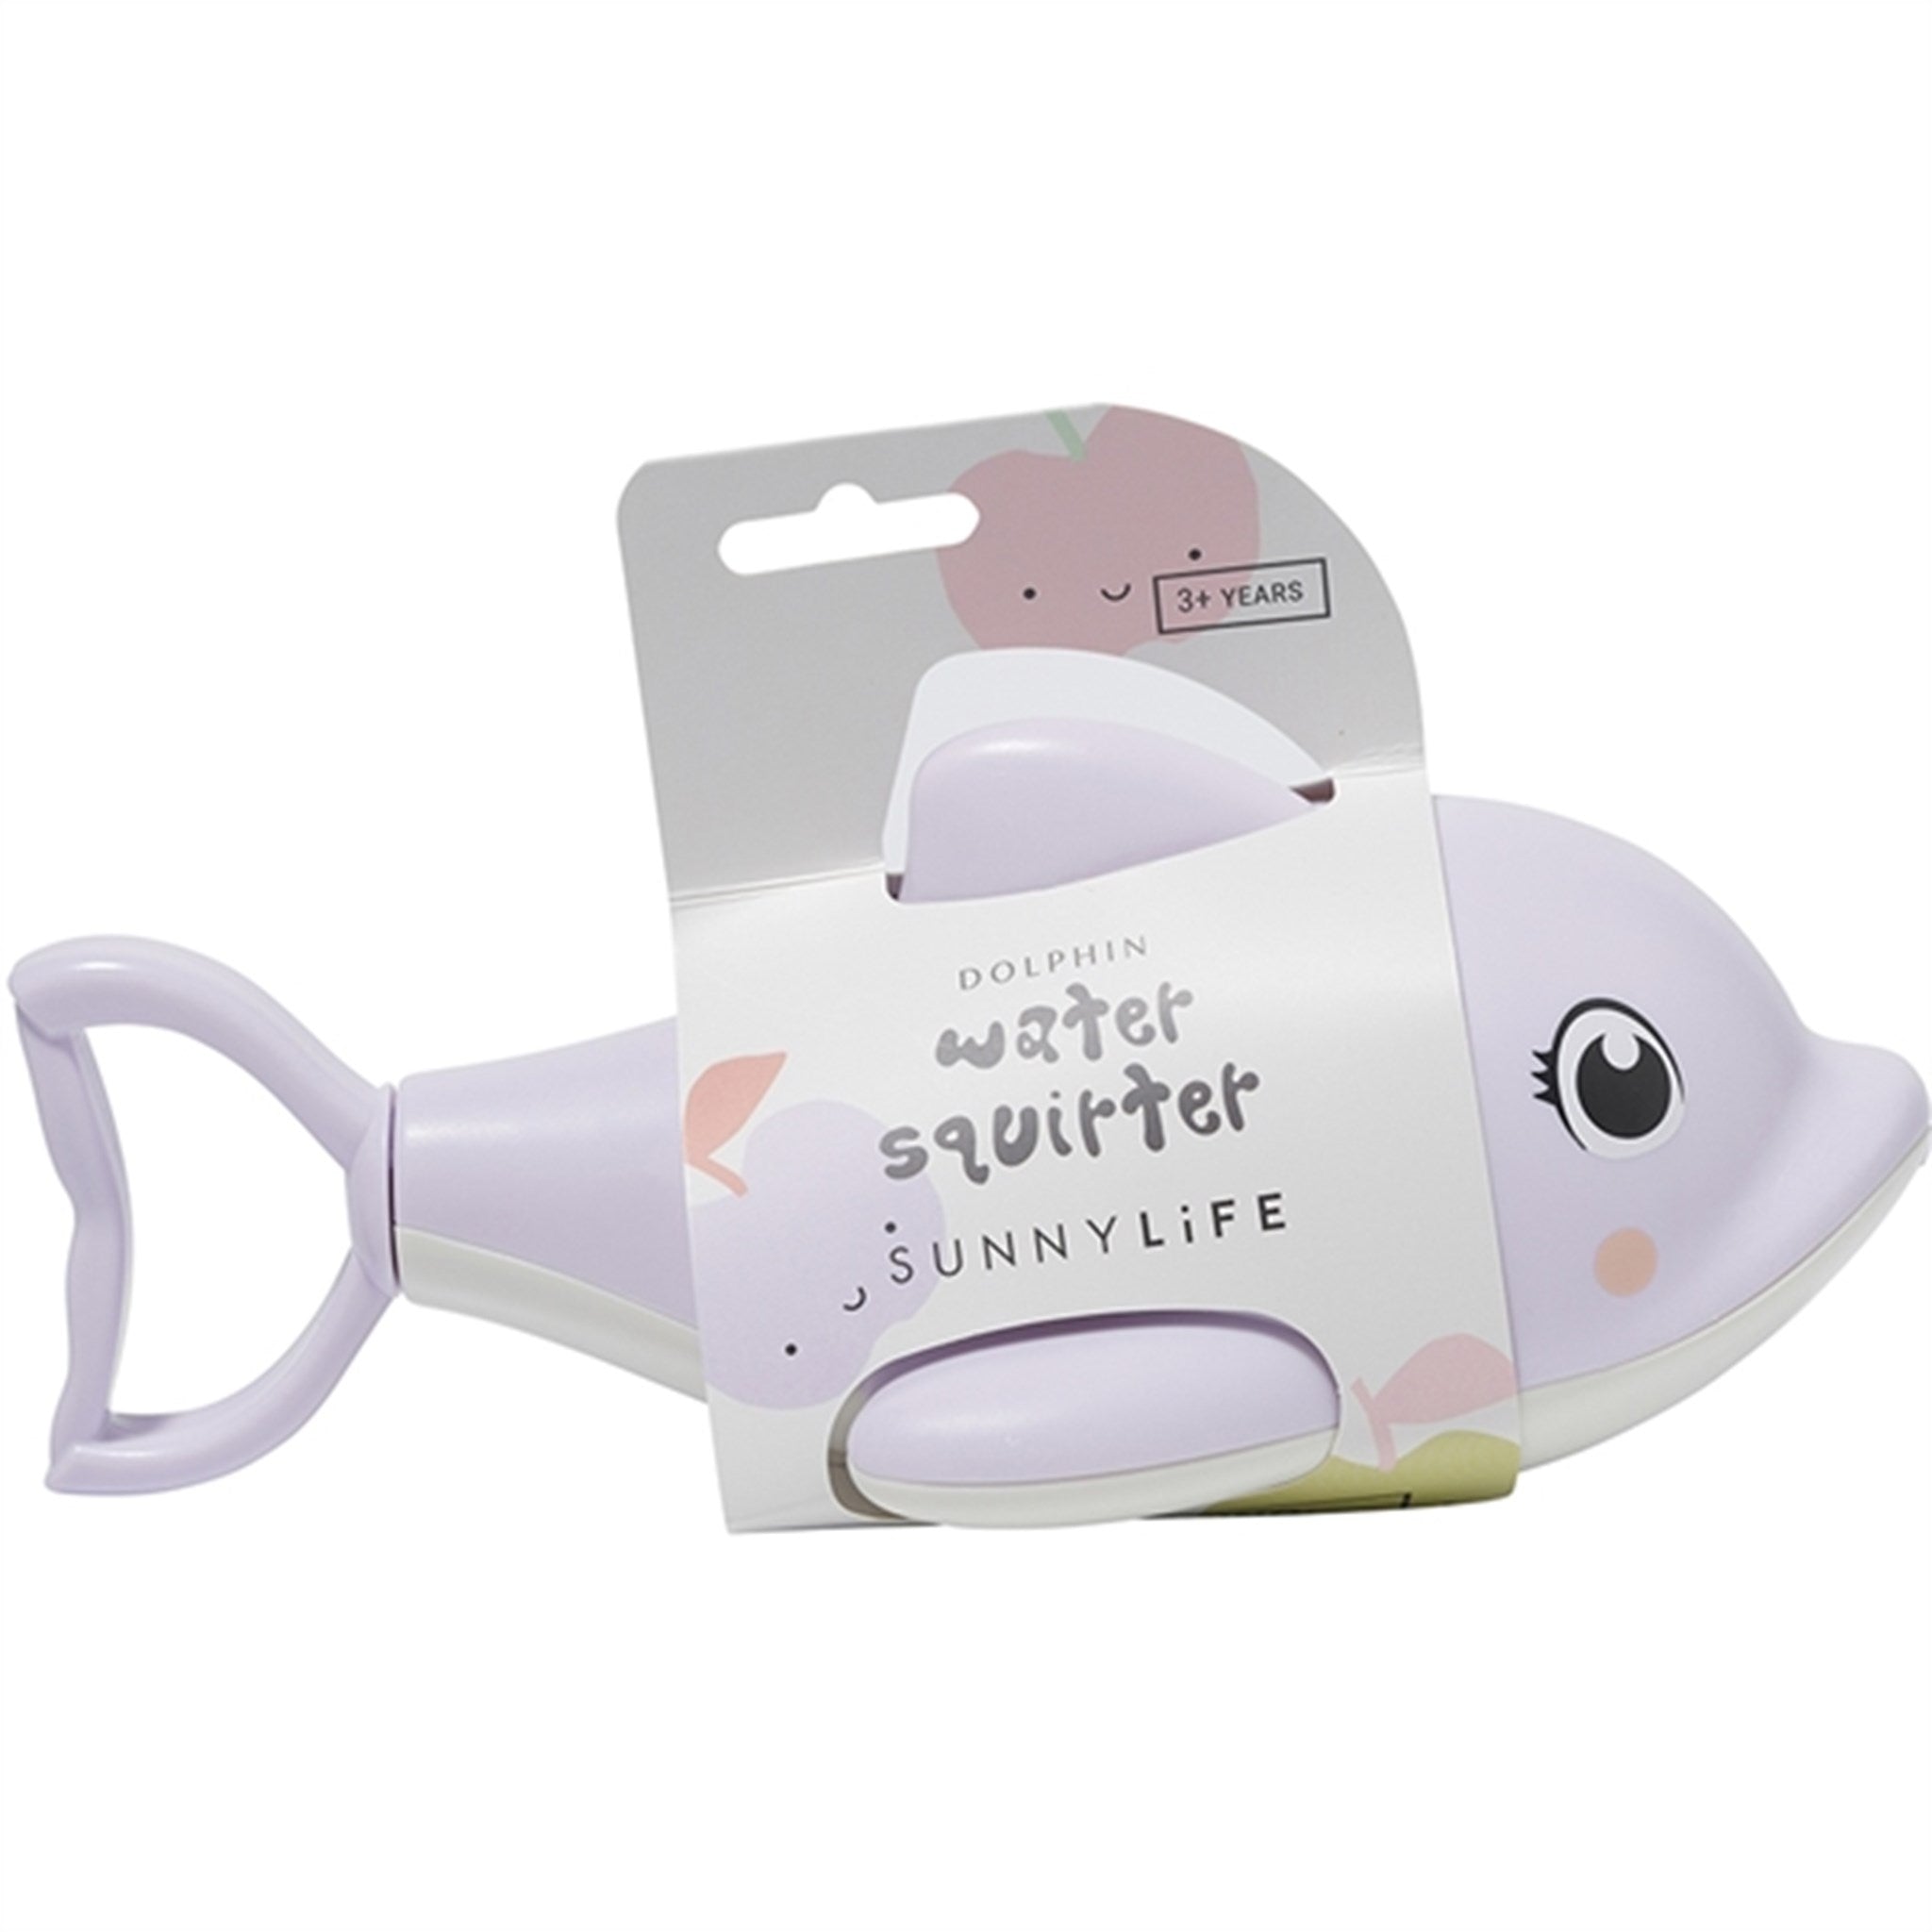 SunnyLife Bath Squirters Dolphin Pastel Lilac 5